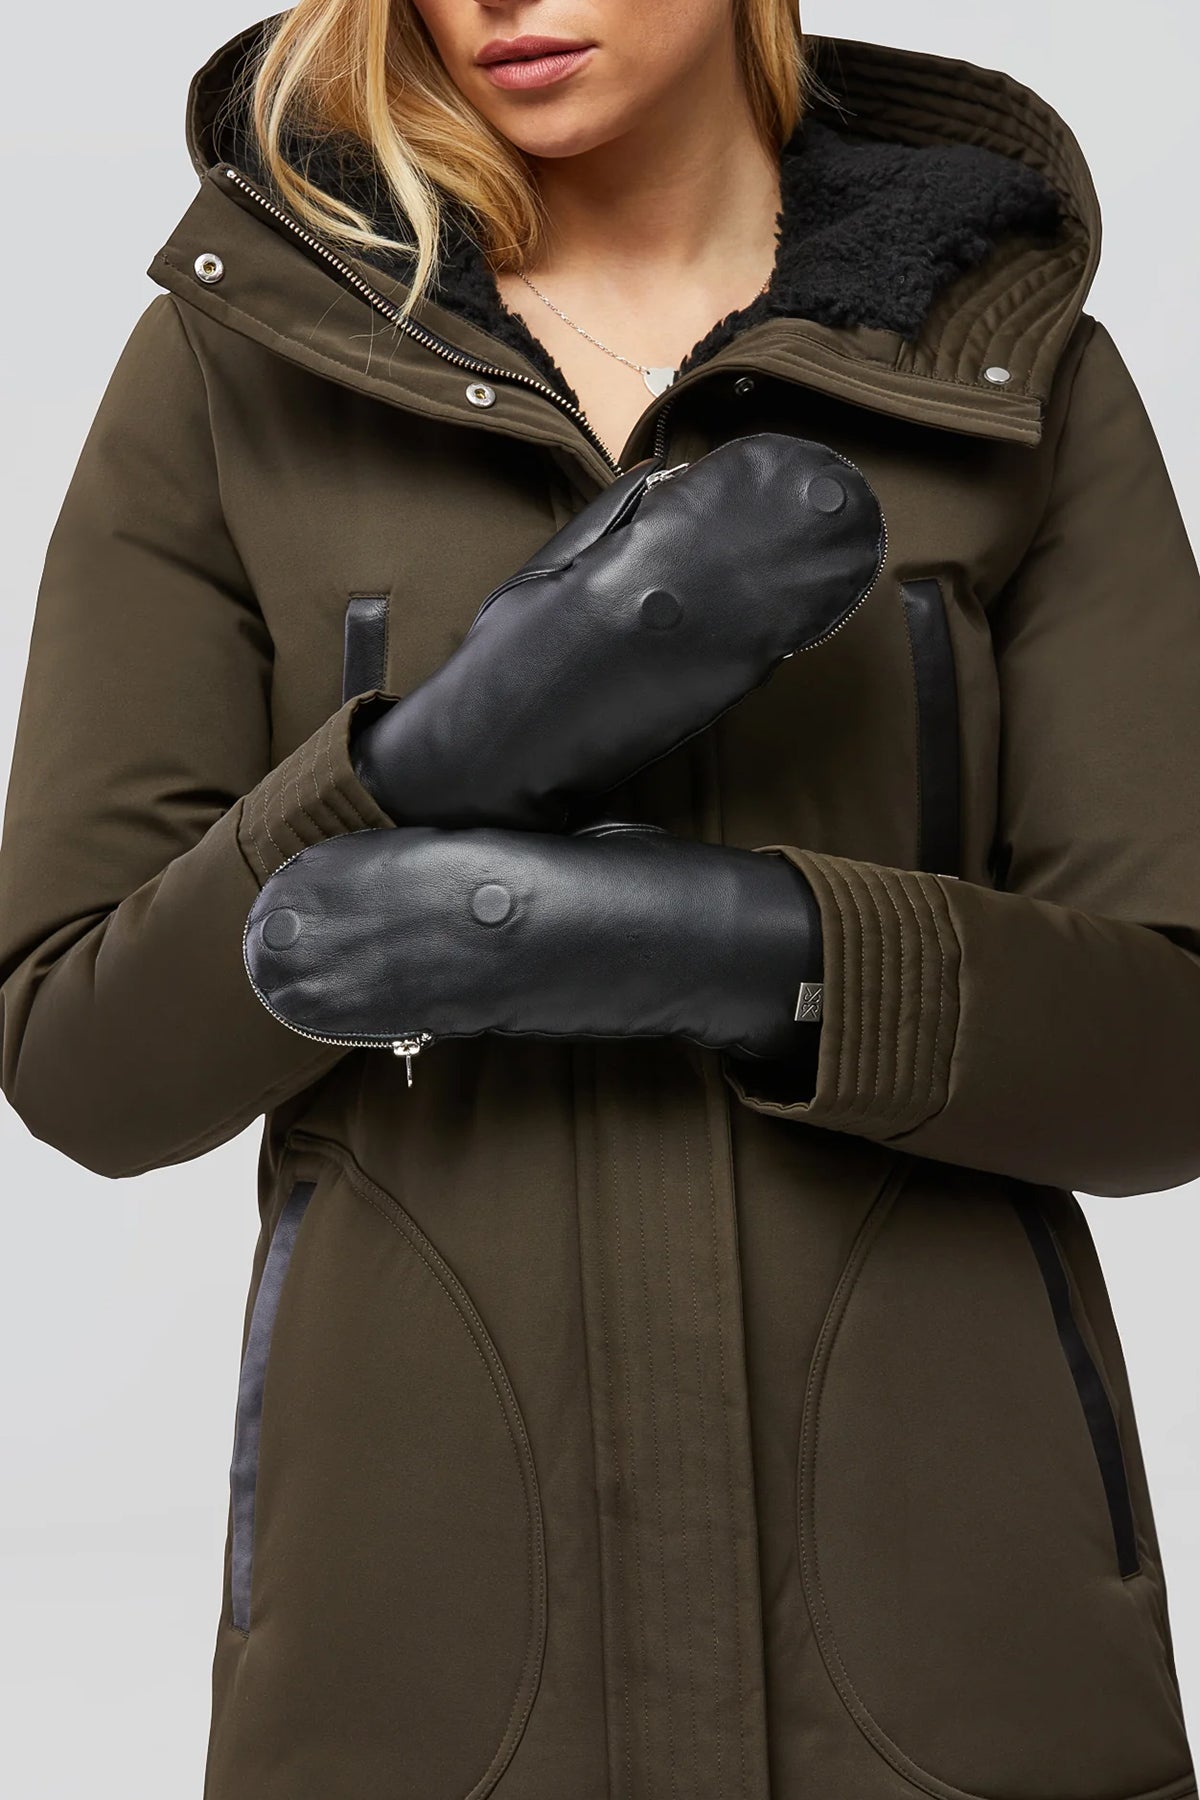 Betrice Gloves